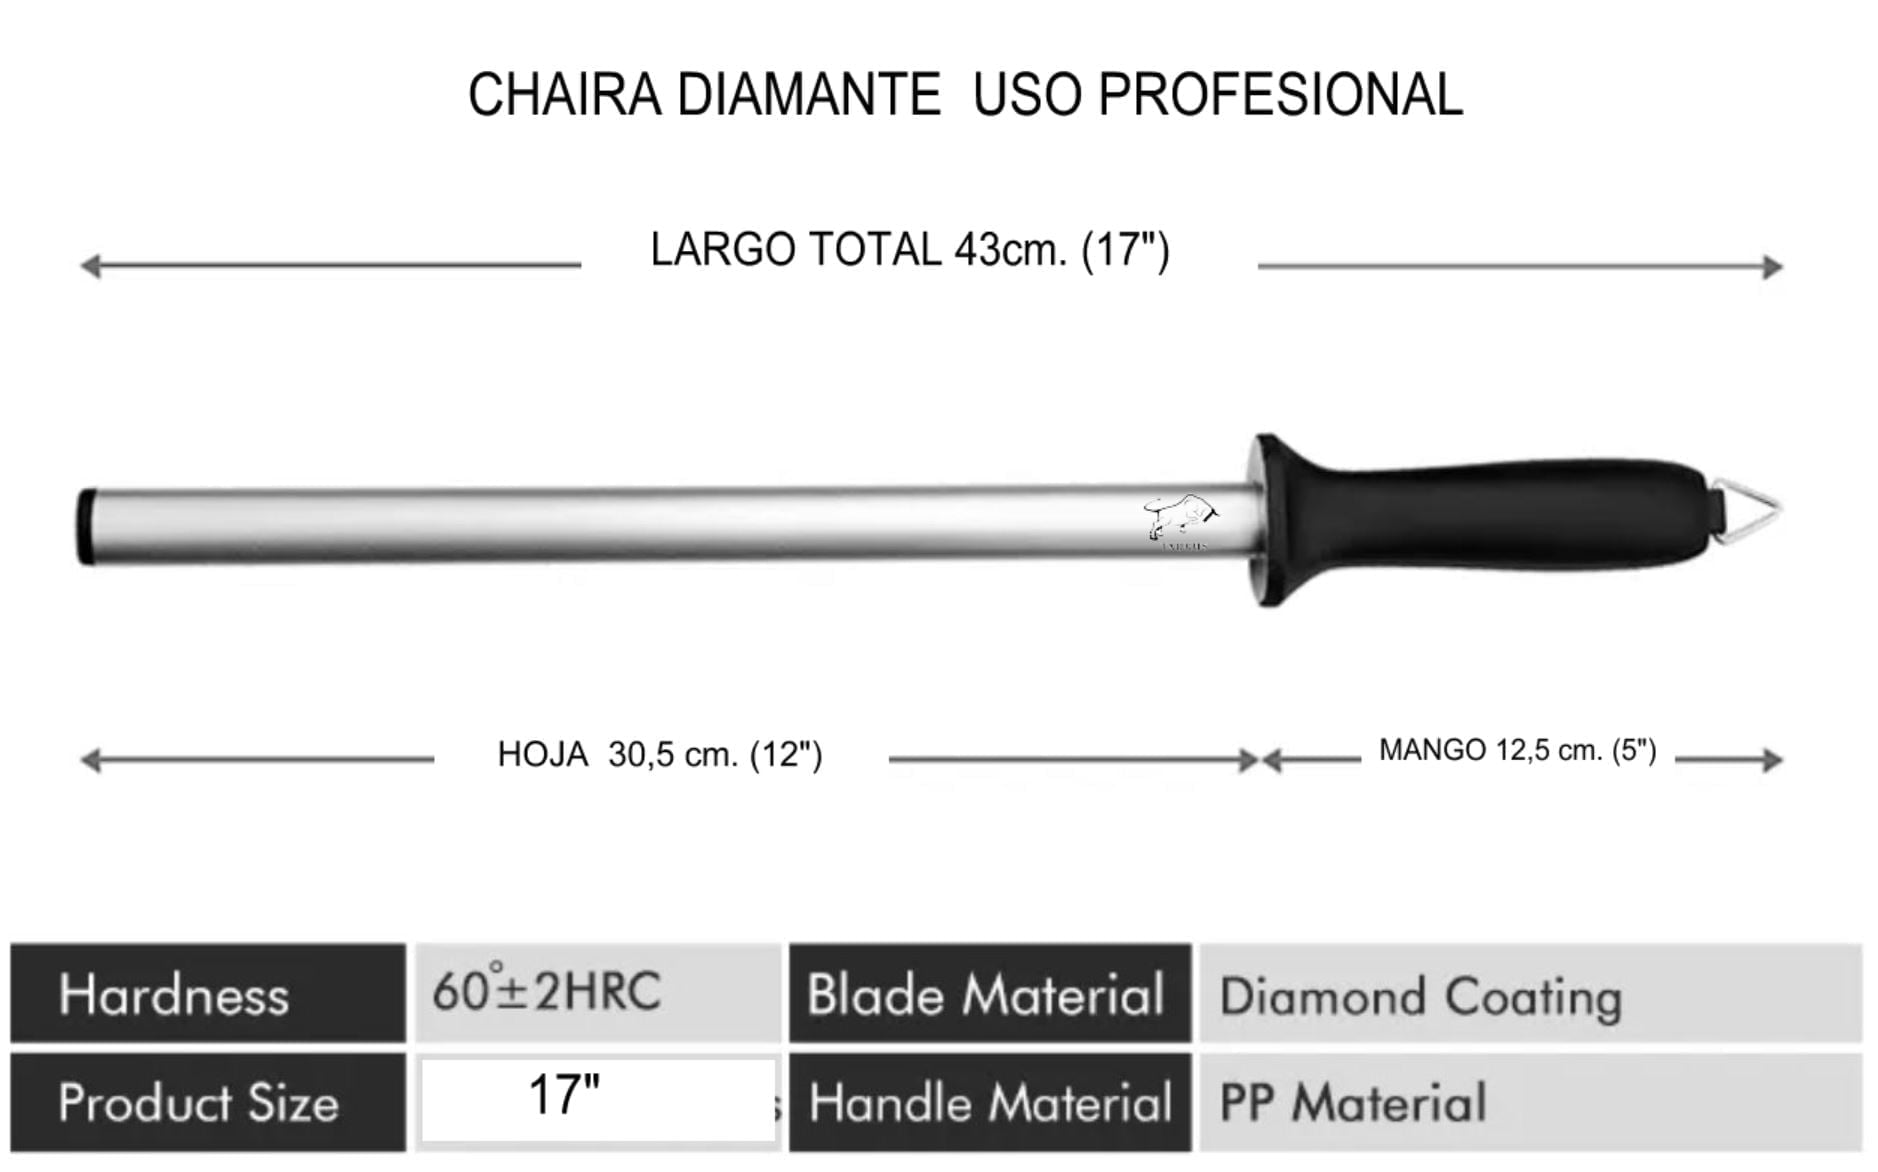 Chaira Diamante 30 Cm. Para Afilar Cuchillos (12 Pulgadas) – El Banneton